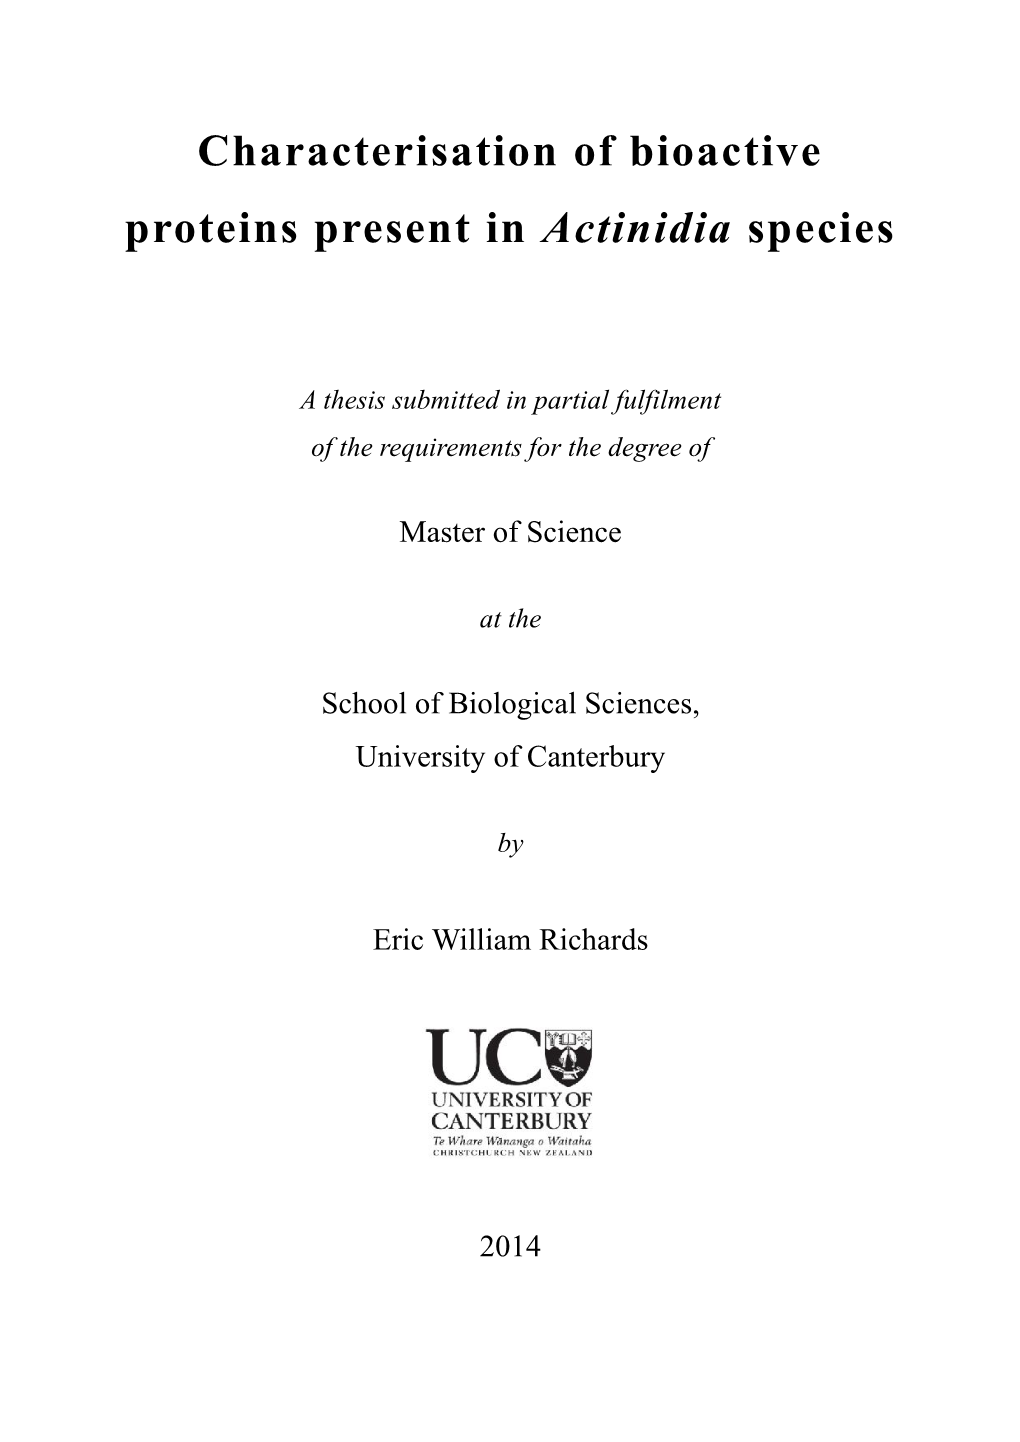 Characterisation of Bioactive Proteins Present in Actinidia Species